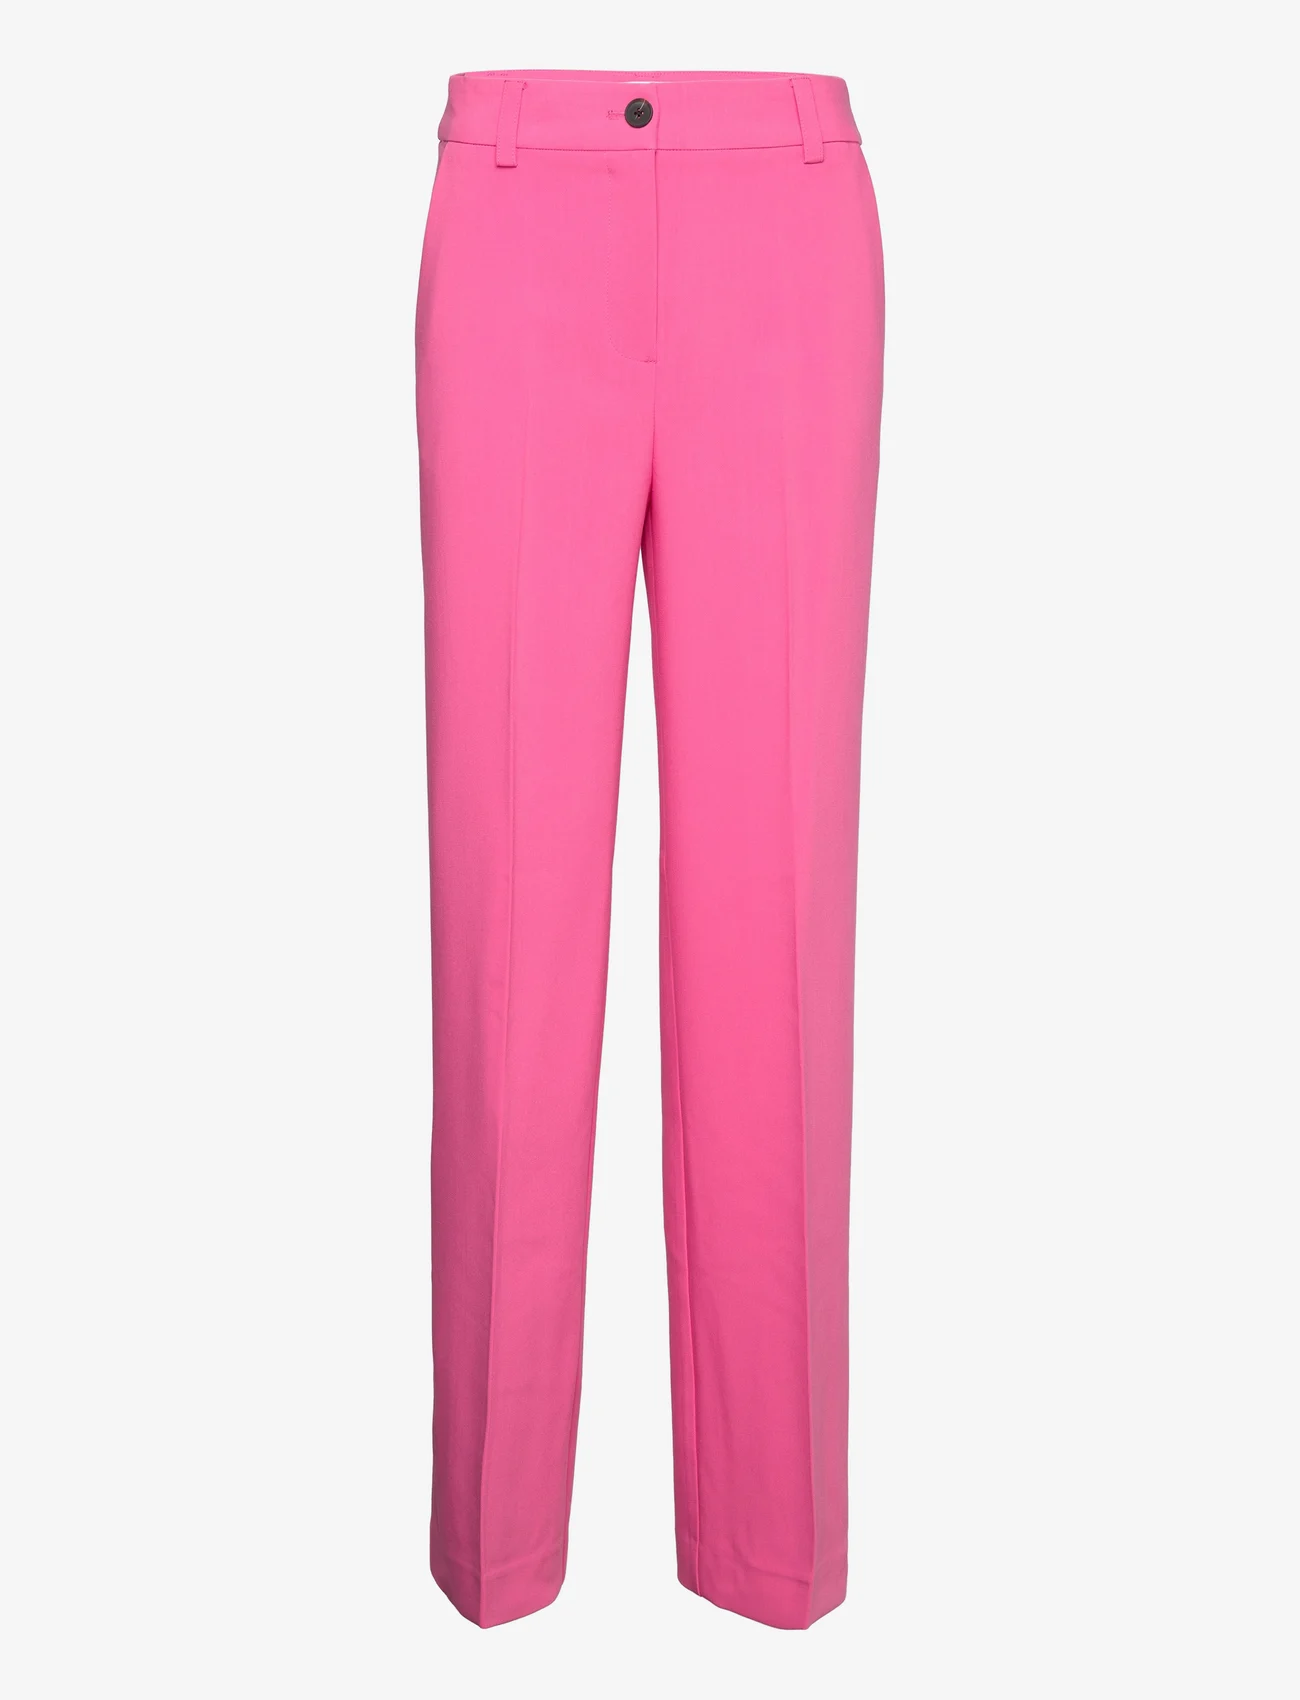 Modström - Gale pants - feestelijke kleding voor outlet-prijzen - taffy pink - 0